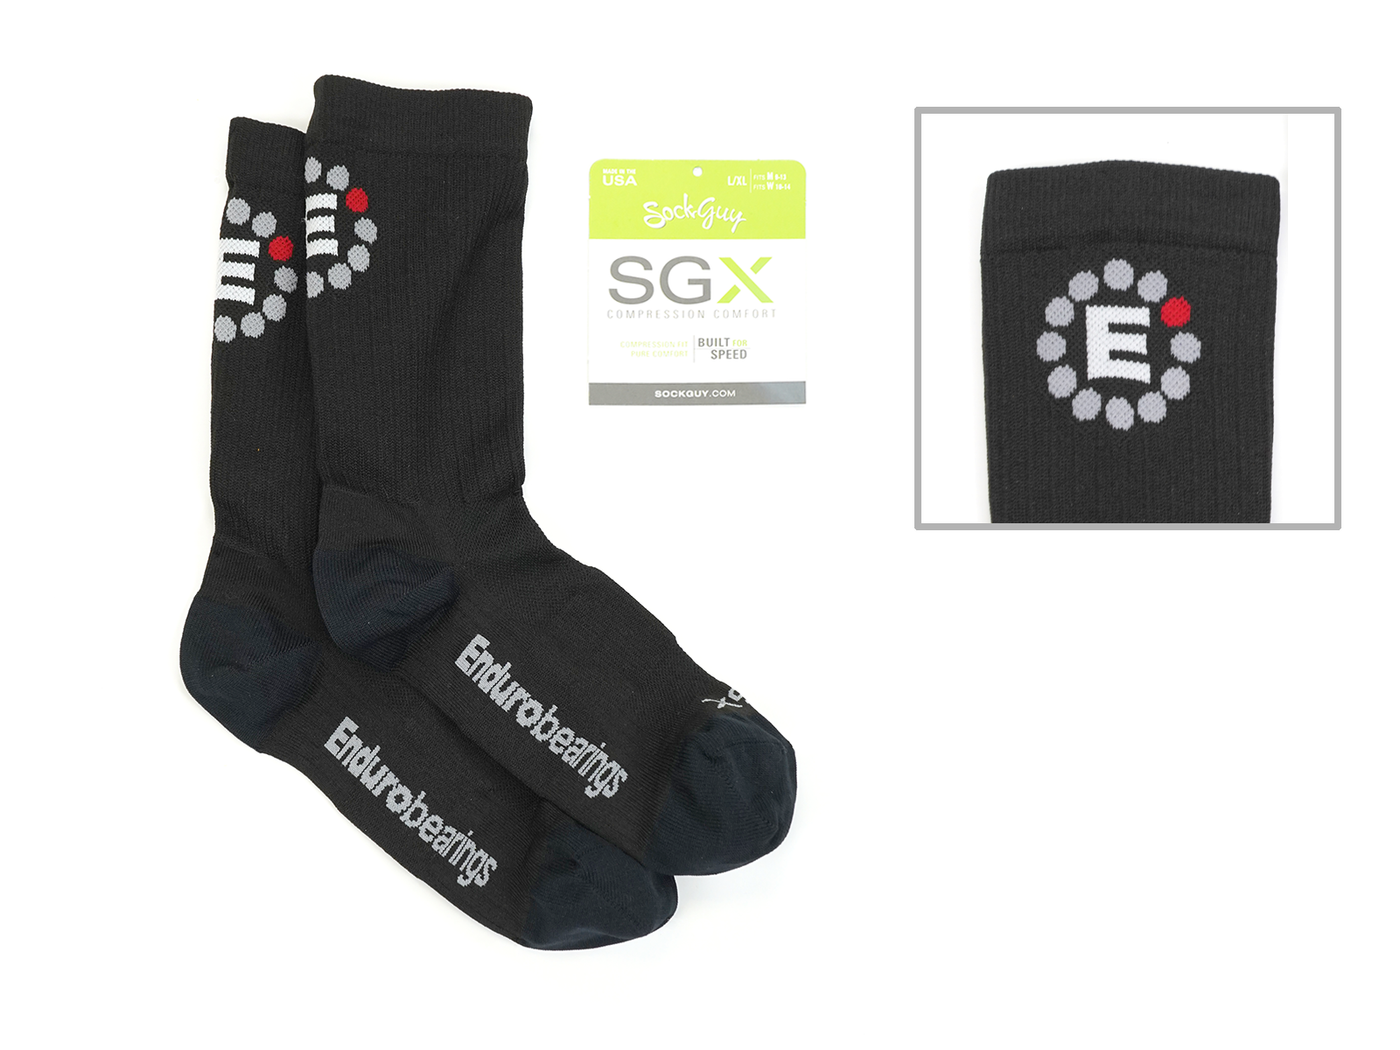 Enduro Bearings Cycling Socks | Sock Guy | SGX compression comfort medium